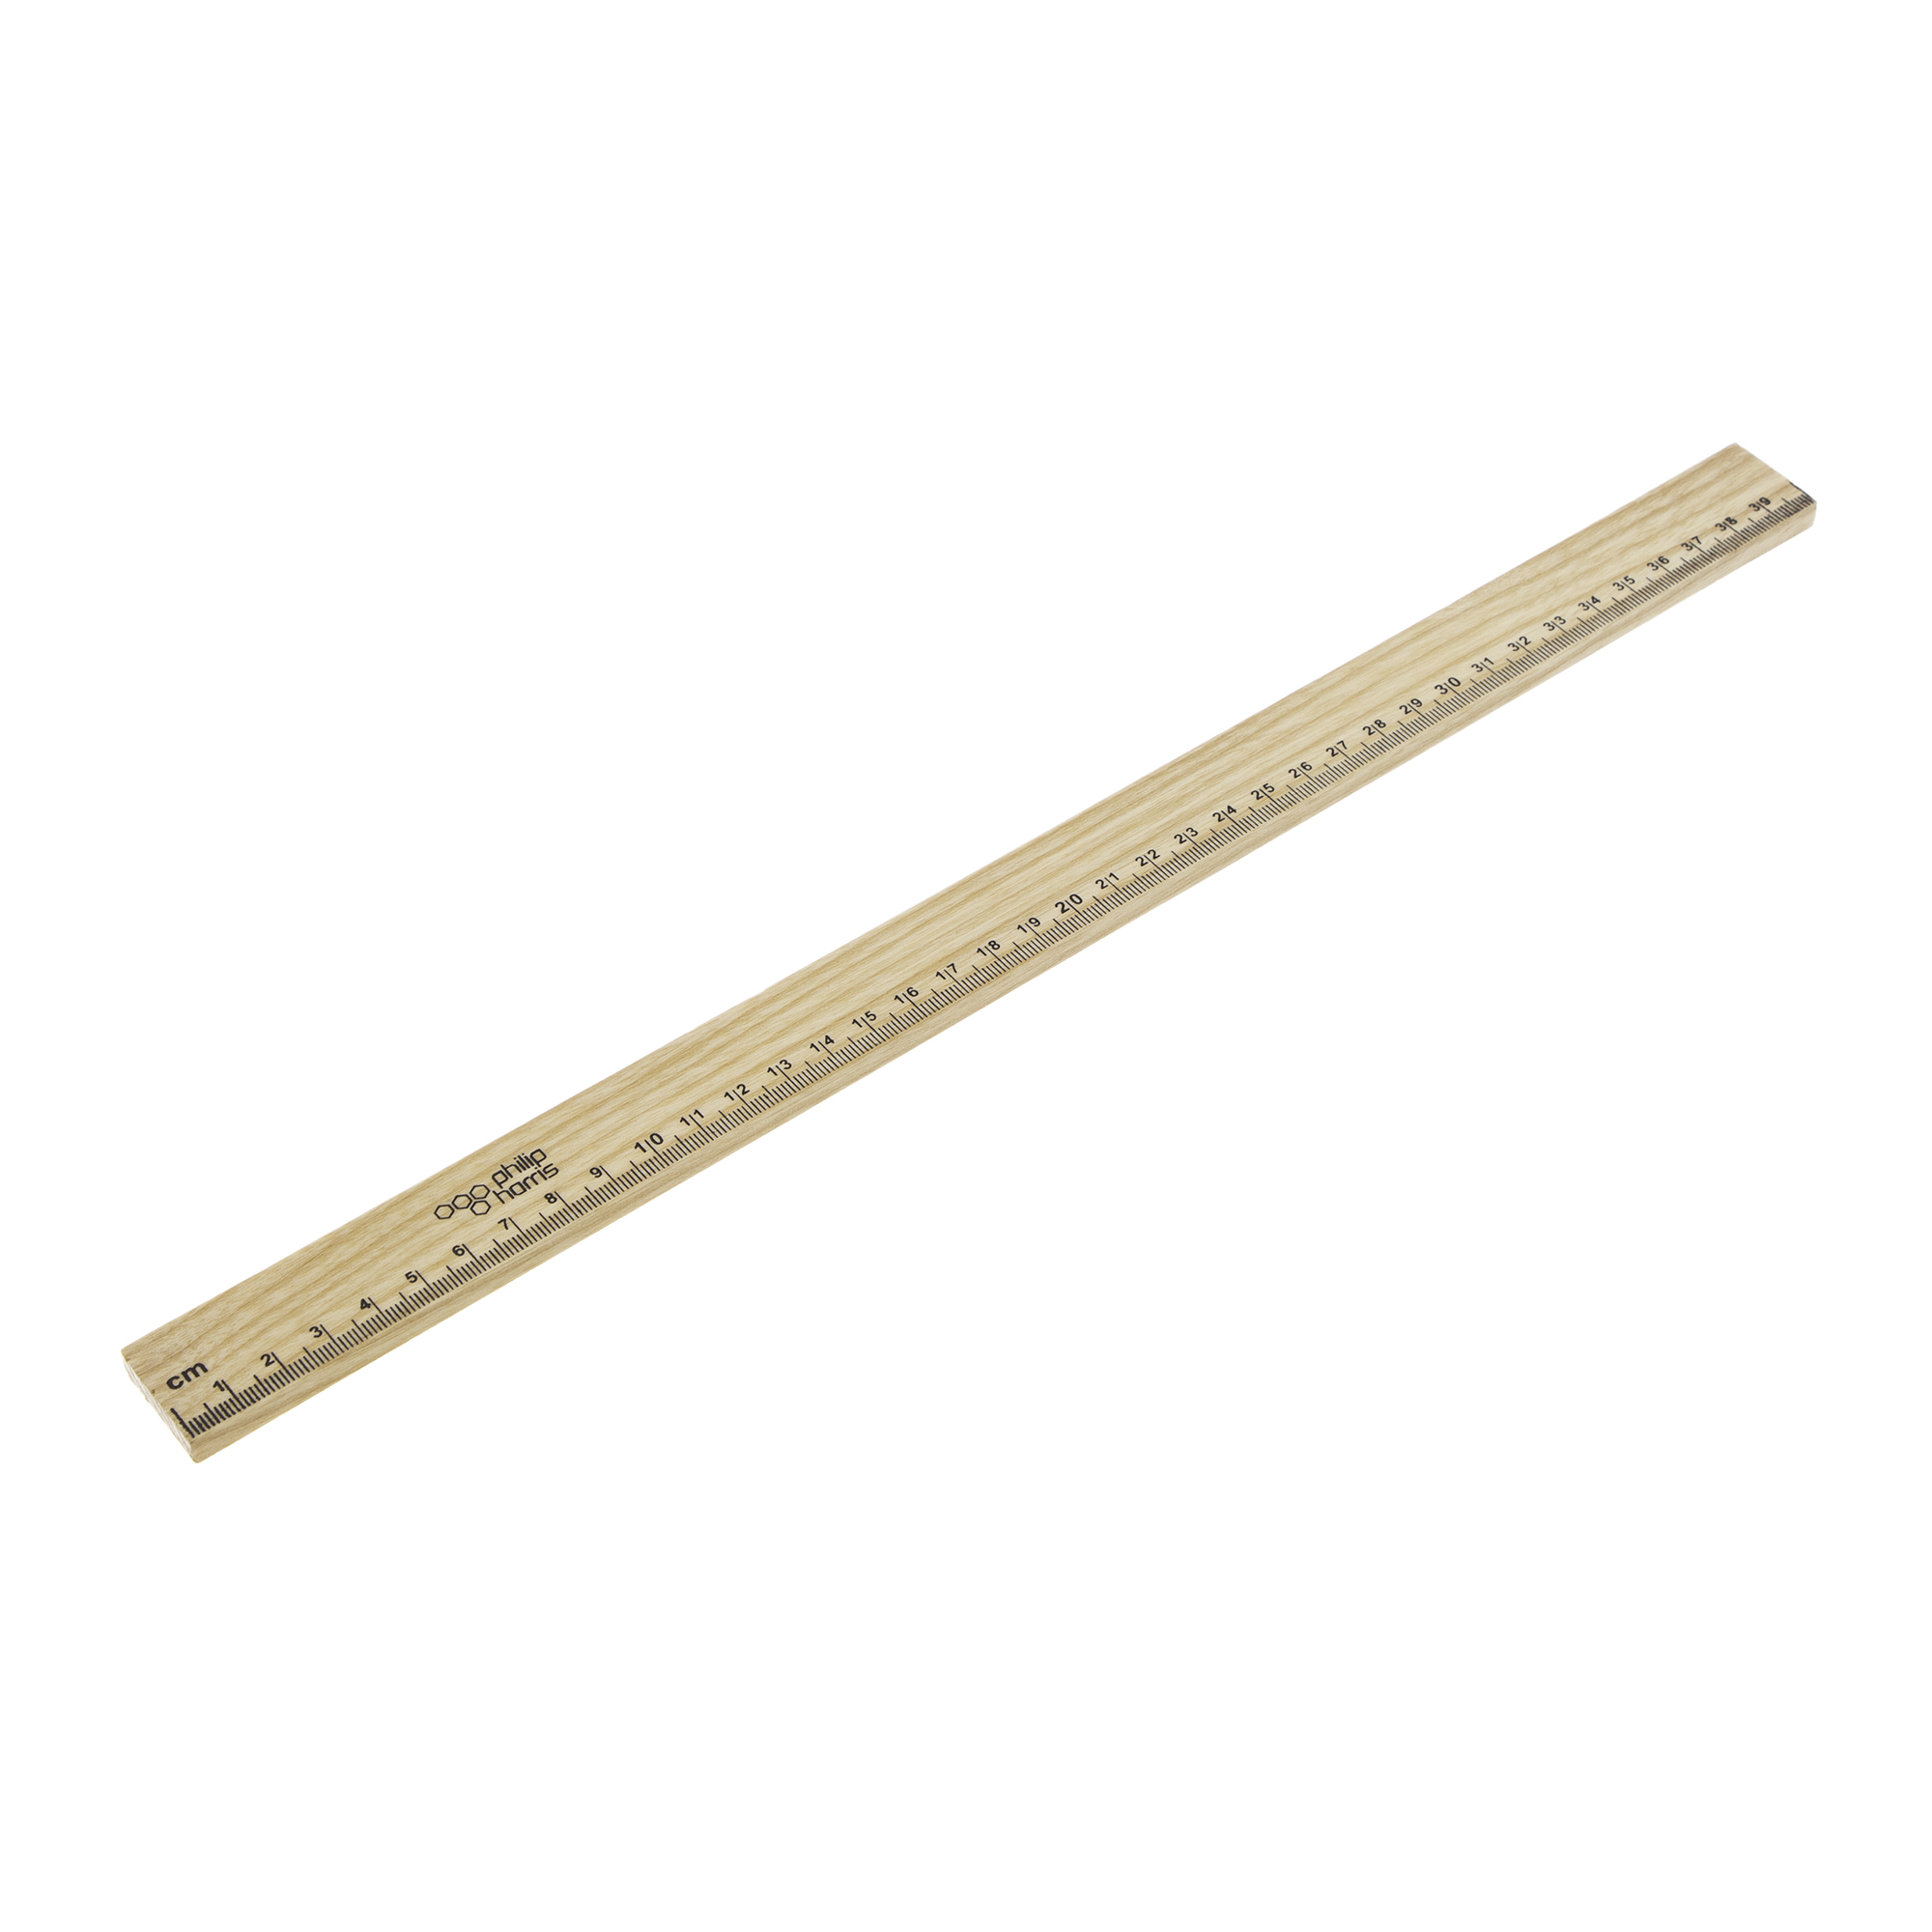 40cm Wooden Ruler - No Hole